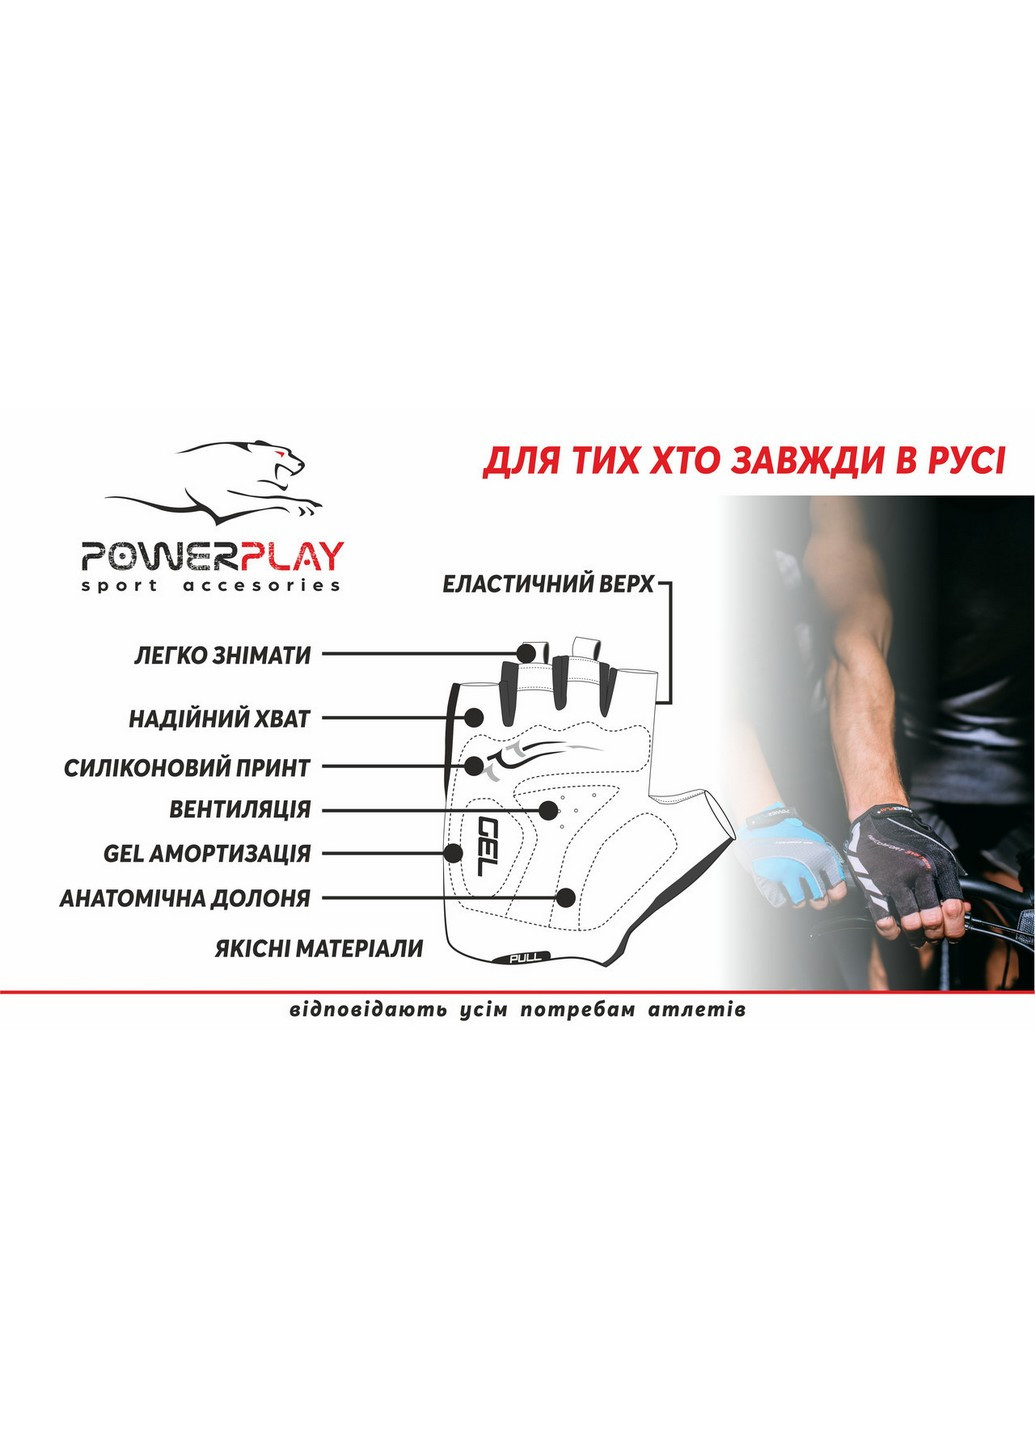 Велоперчатки S PowerPlay (205435551)